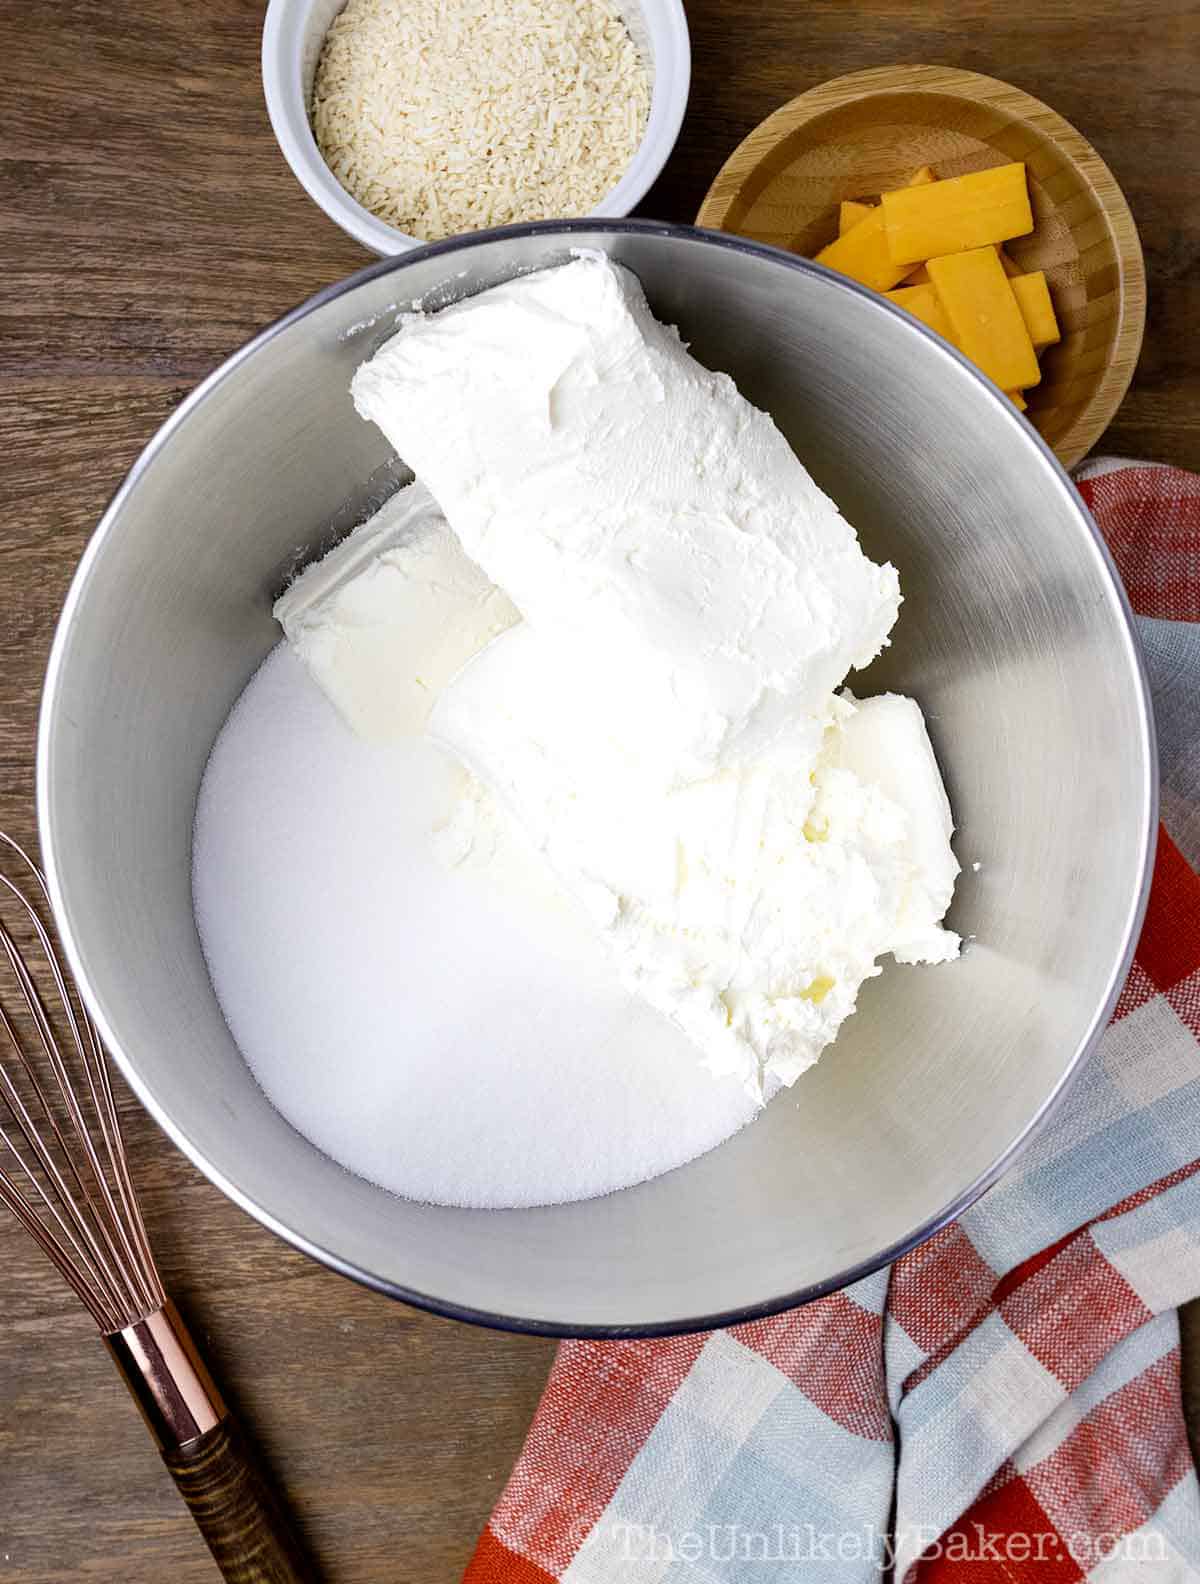 Cream cheese and sugar in a bowl.